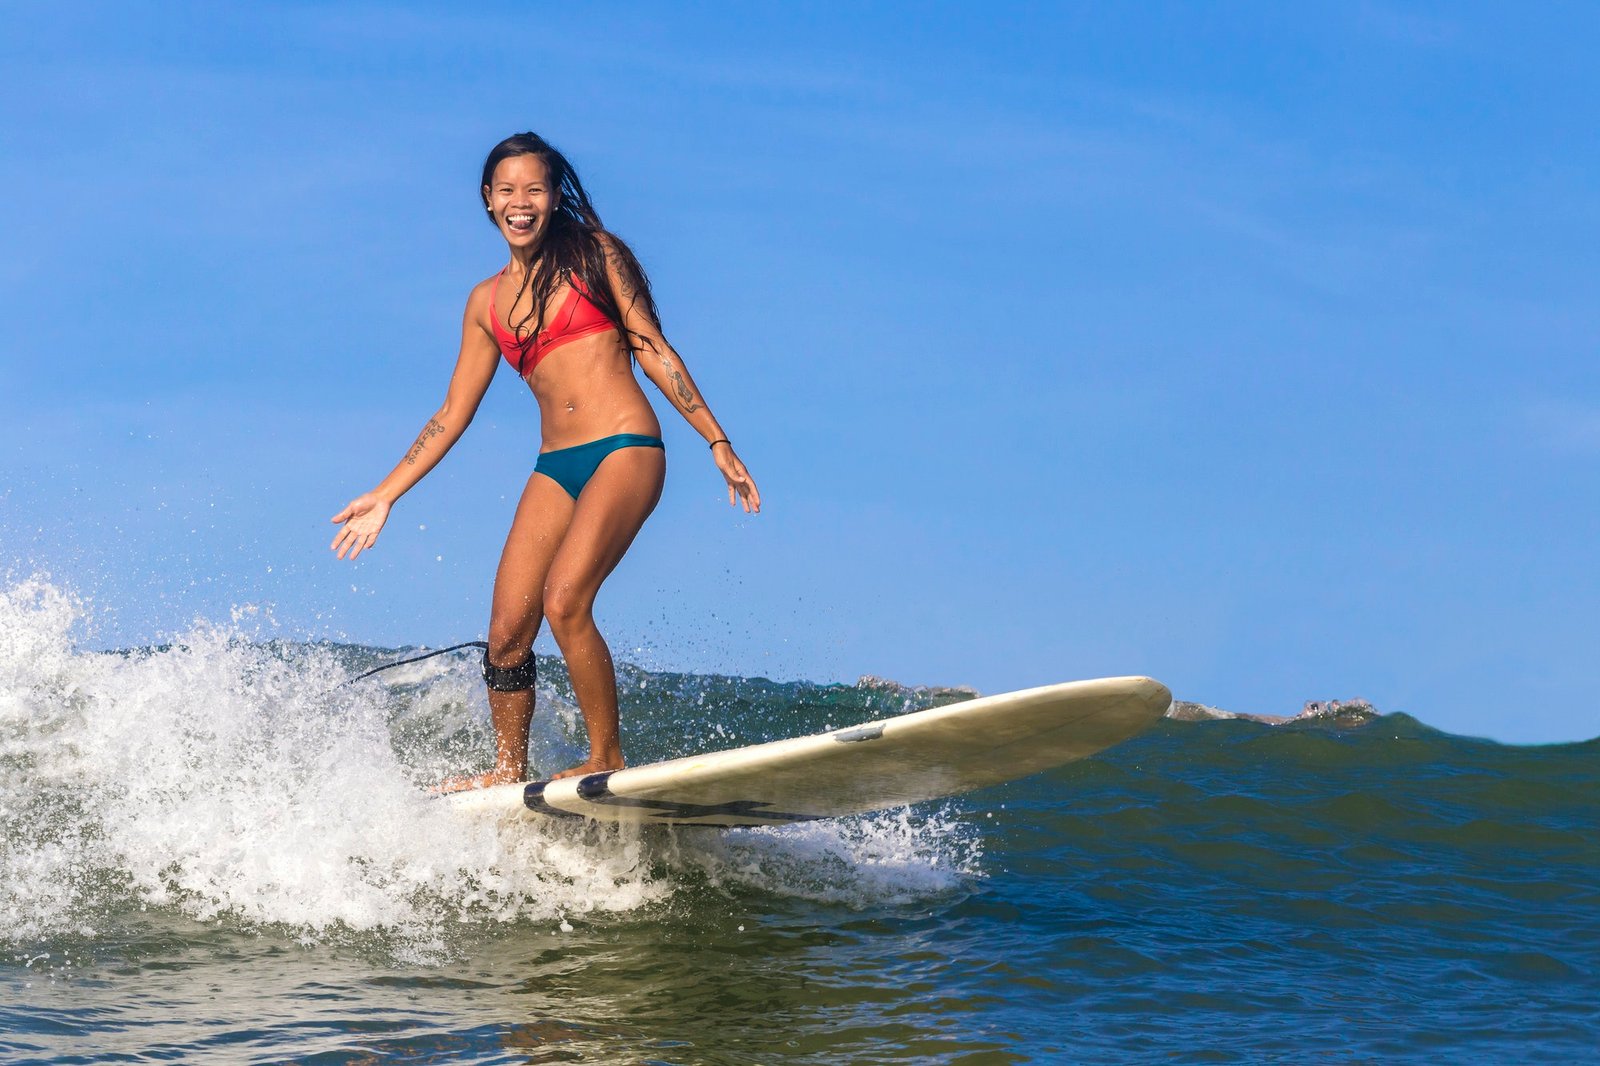 Indonesia, Bali, woman surfing